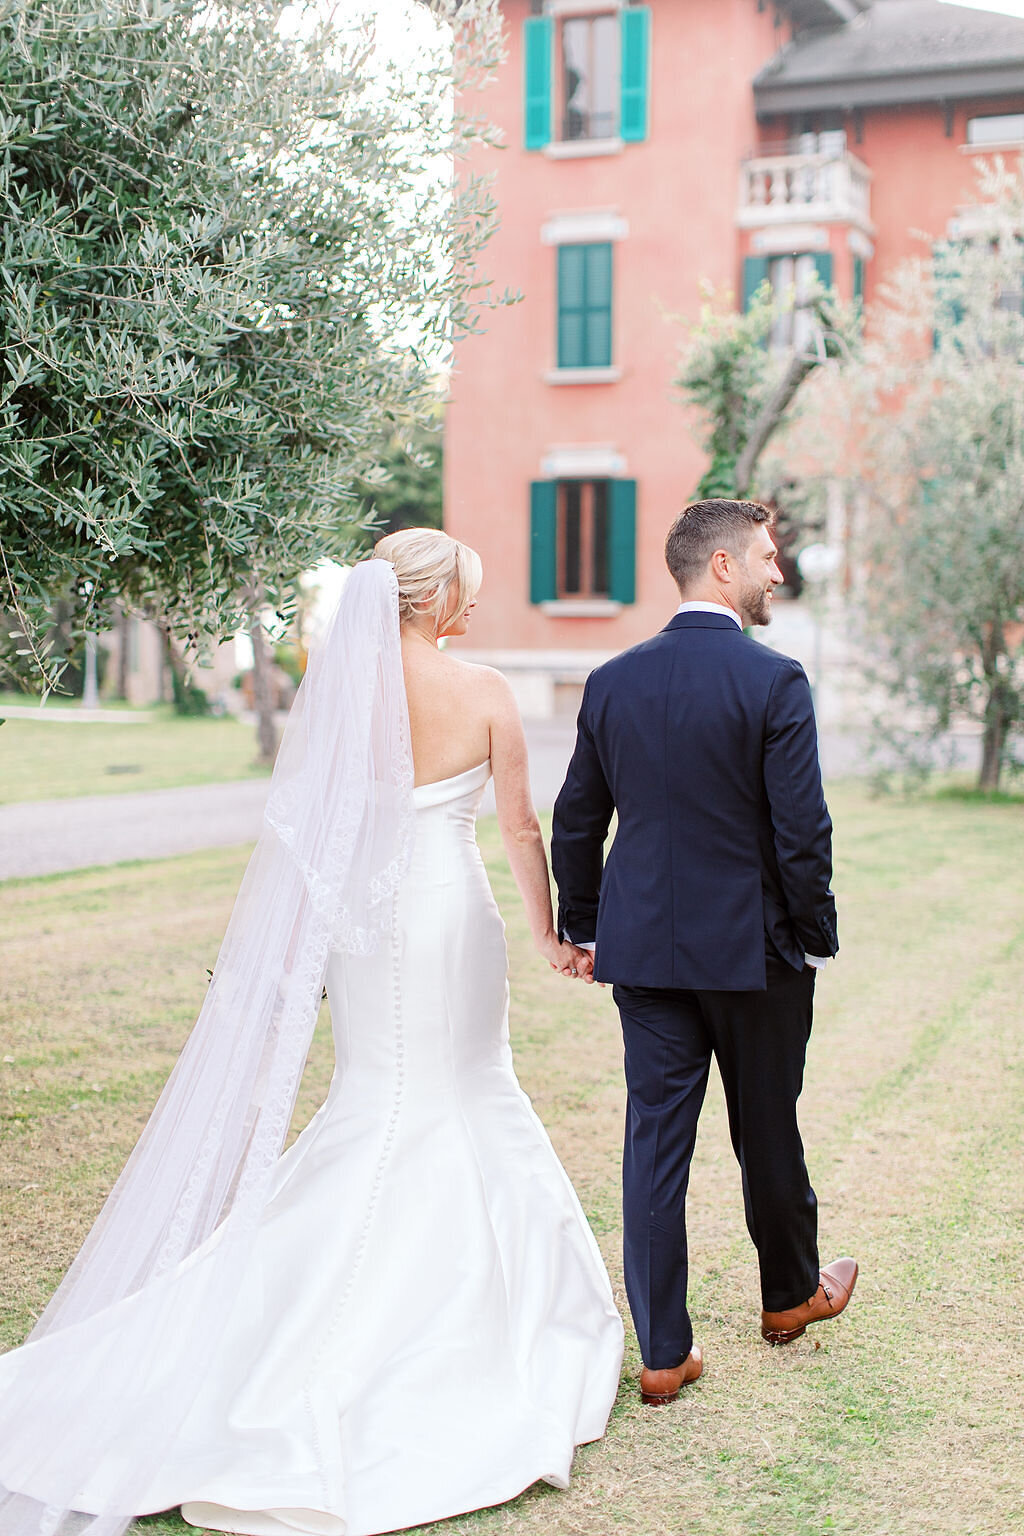 Destination Weddings | Twelfth Night Events - Italy Wedding Planner49